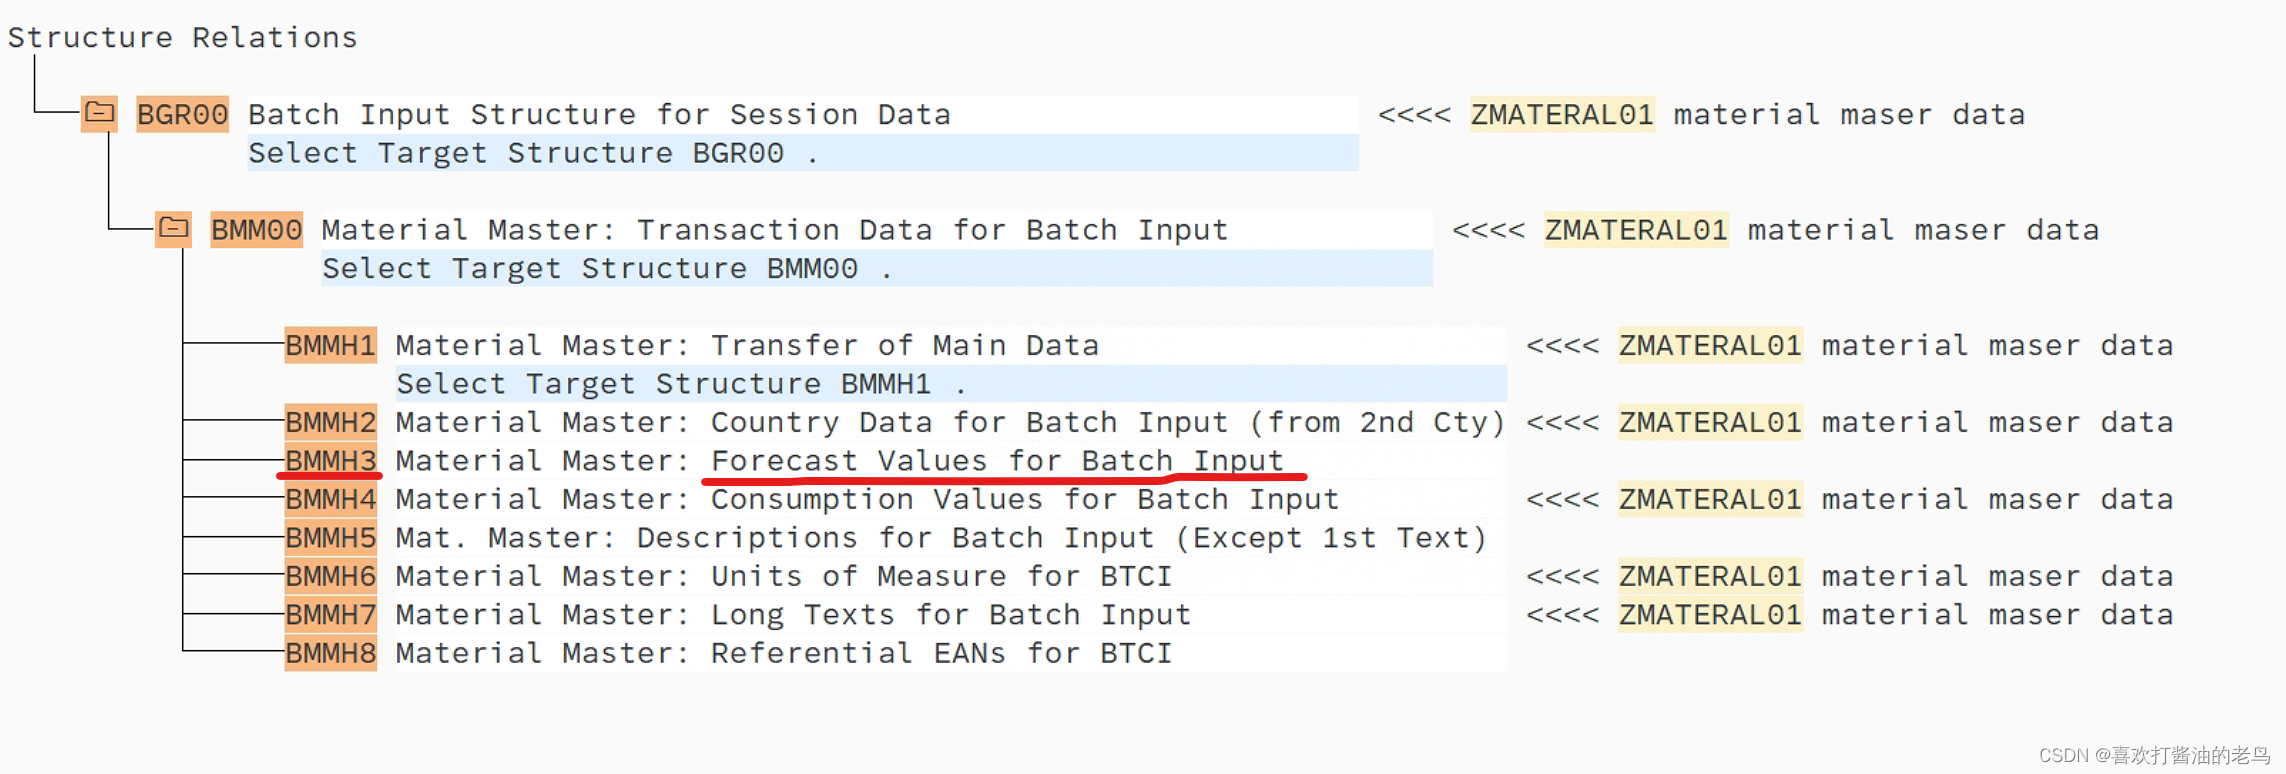 SAP LSWM 导入物料主数据报错- Enter a forecast model or model selection - 之对策_Forecast Value_04